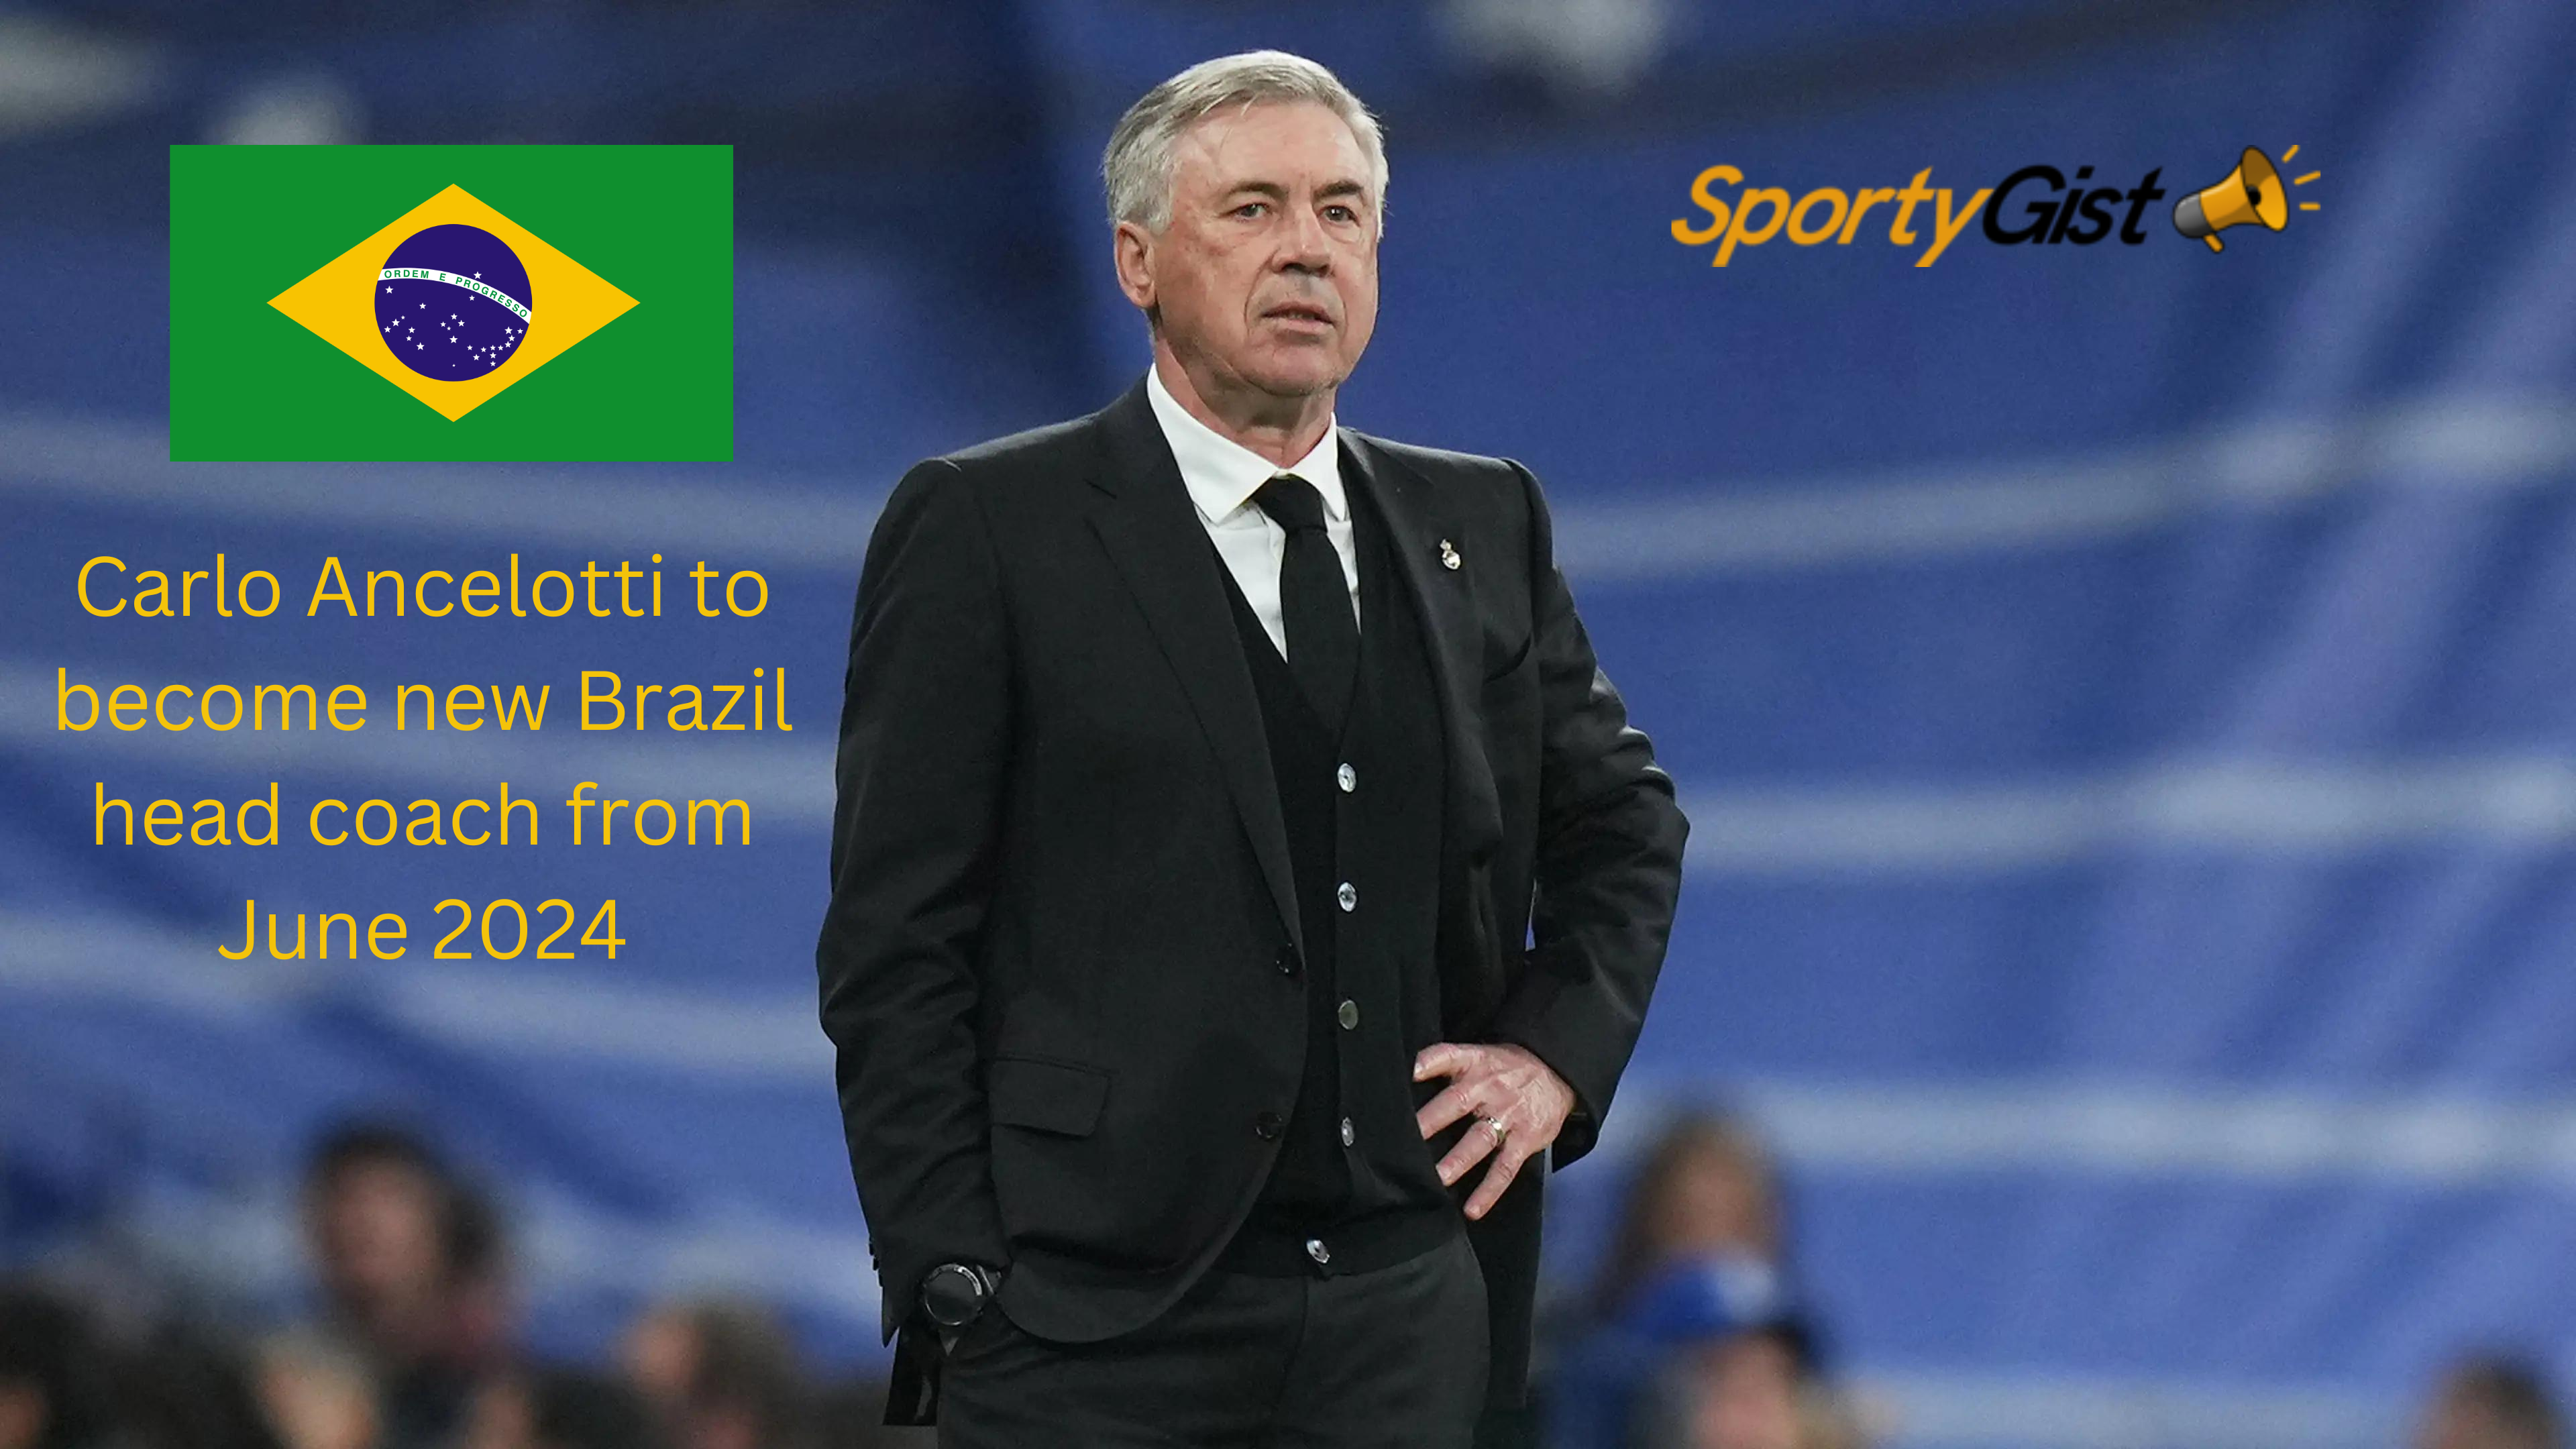 Carlo Ancelotti to become new Brazil head coach from 2024